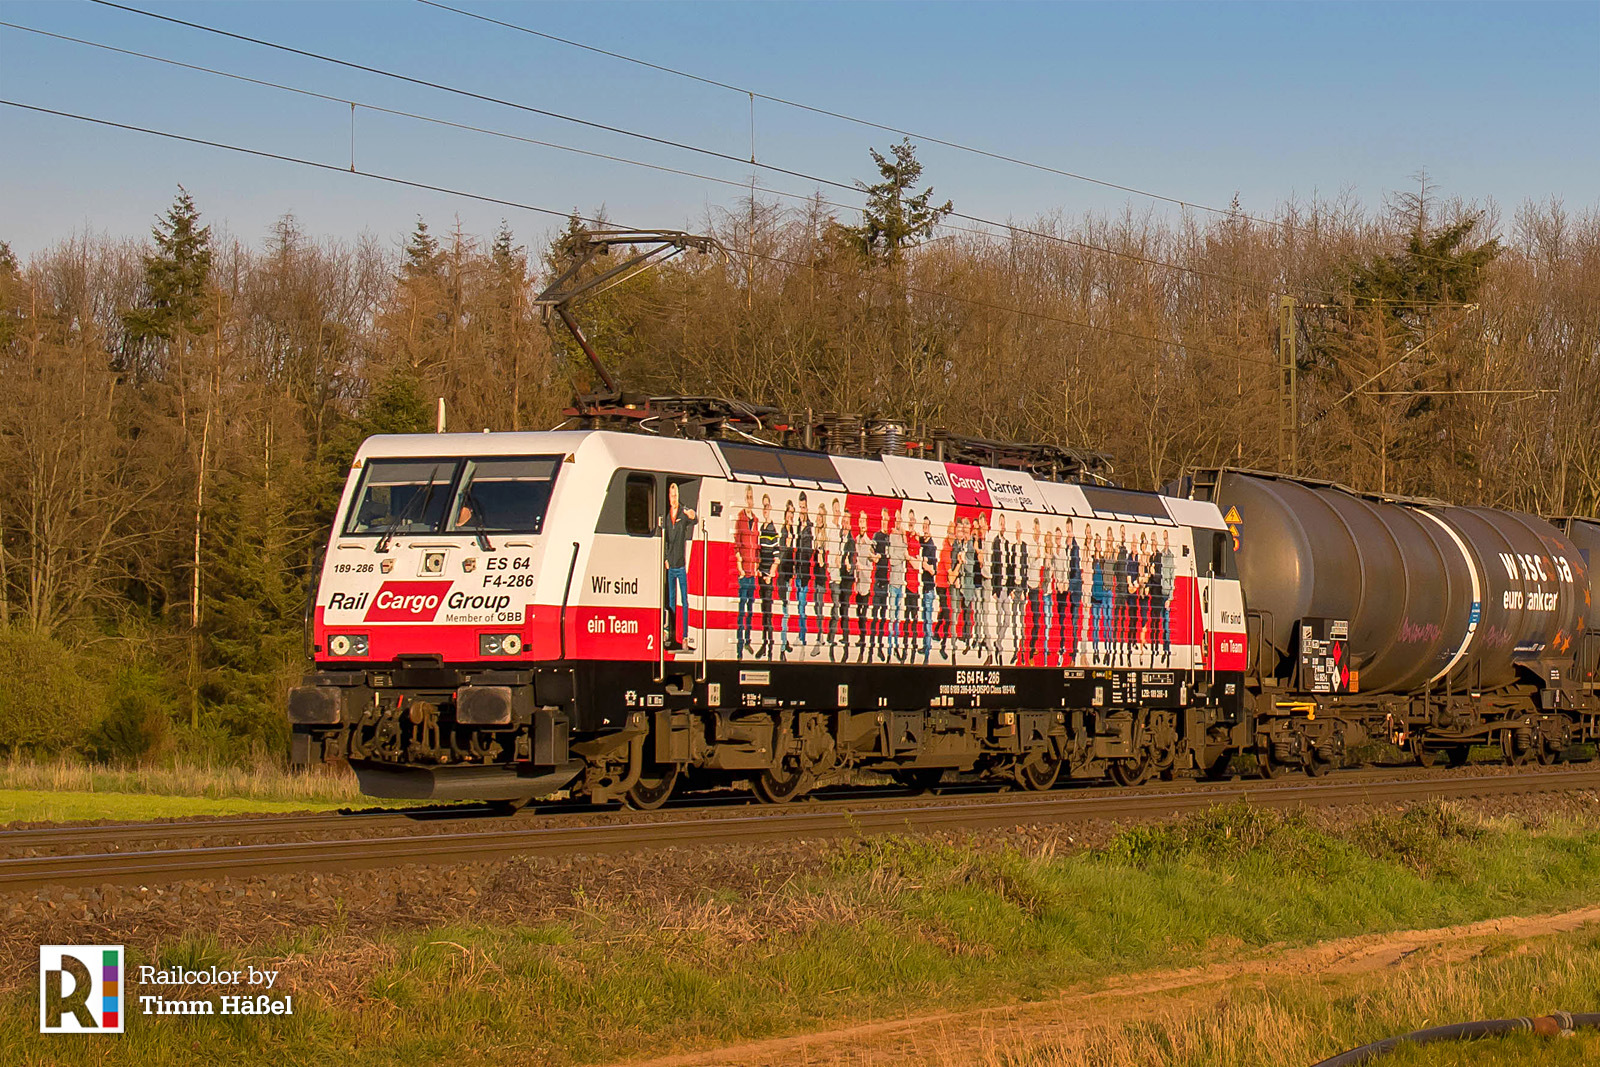 Siemens-ES64F4-189-286_Rail-Cargo-Group_Railcolor-News_Tim-Hassel_2233.jpg